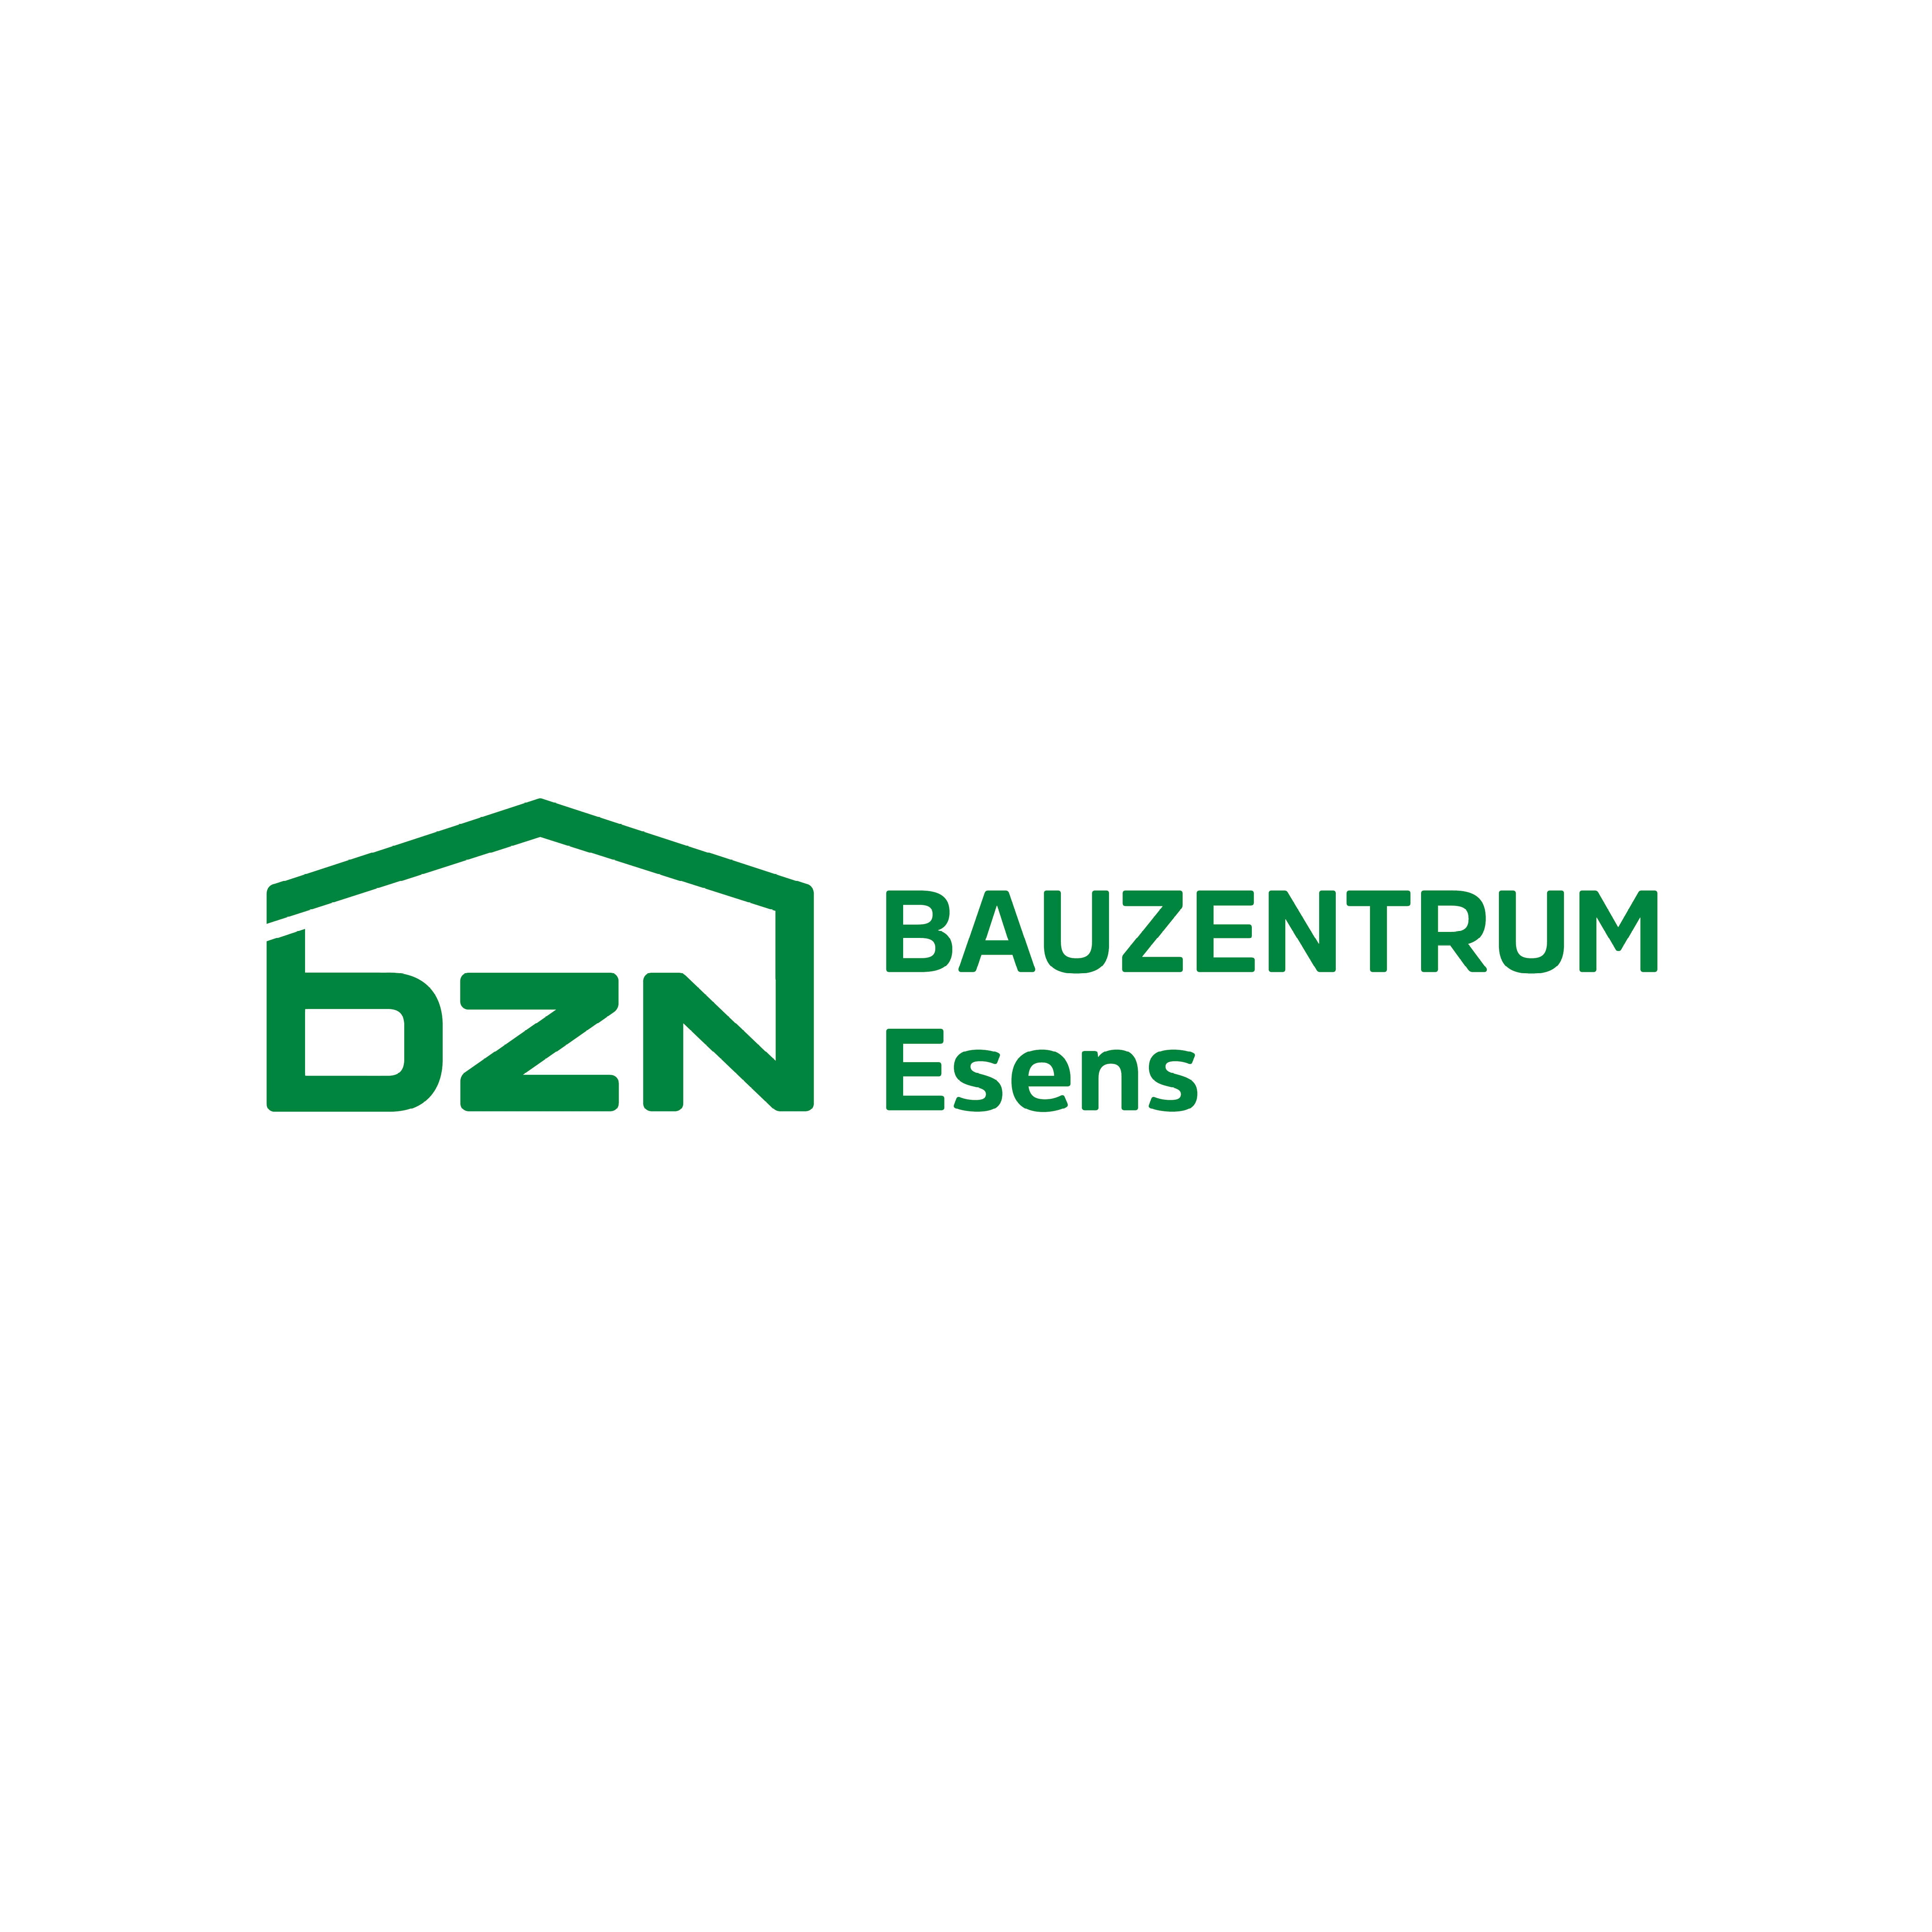 BZN Bauzentrum Esens GmbH & Co. KG in Esens - Logo